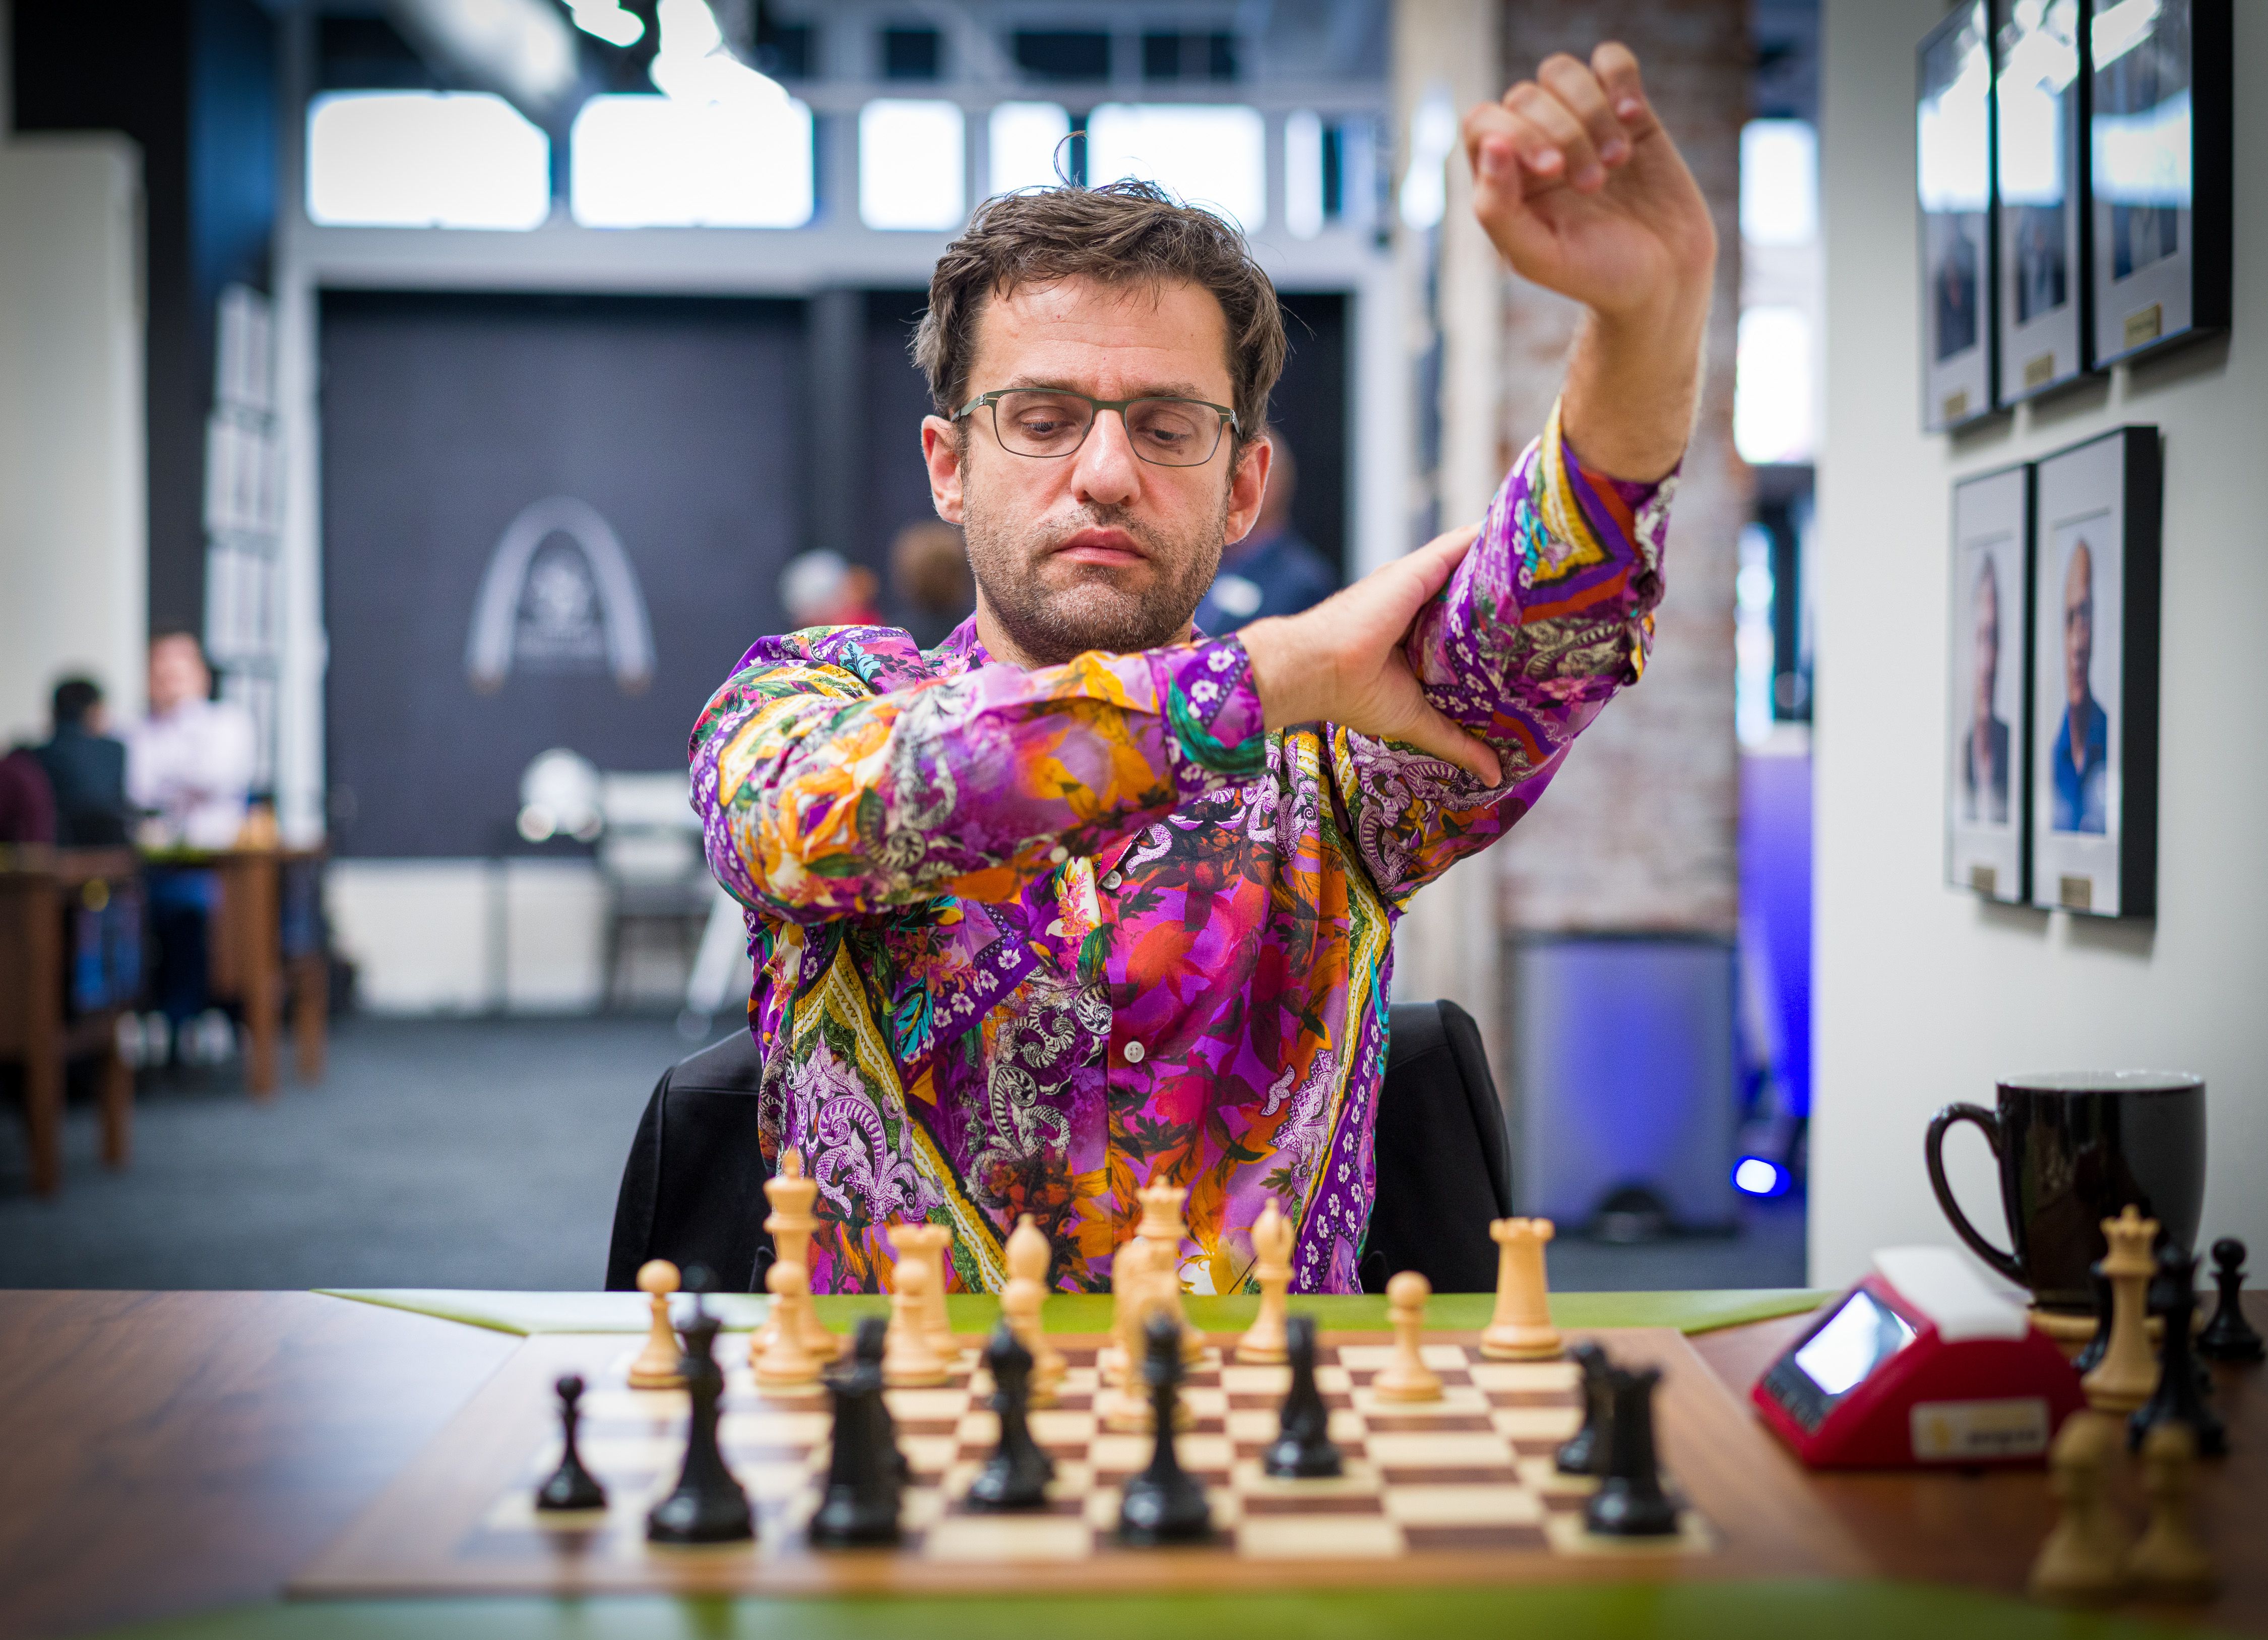 Grand Chess Tour on X: Alireza Firouzja wins #STLRapidBlitz 4